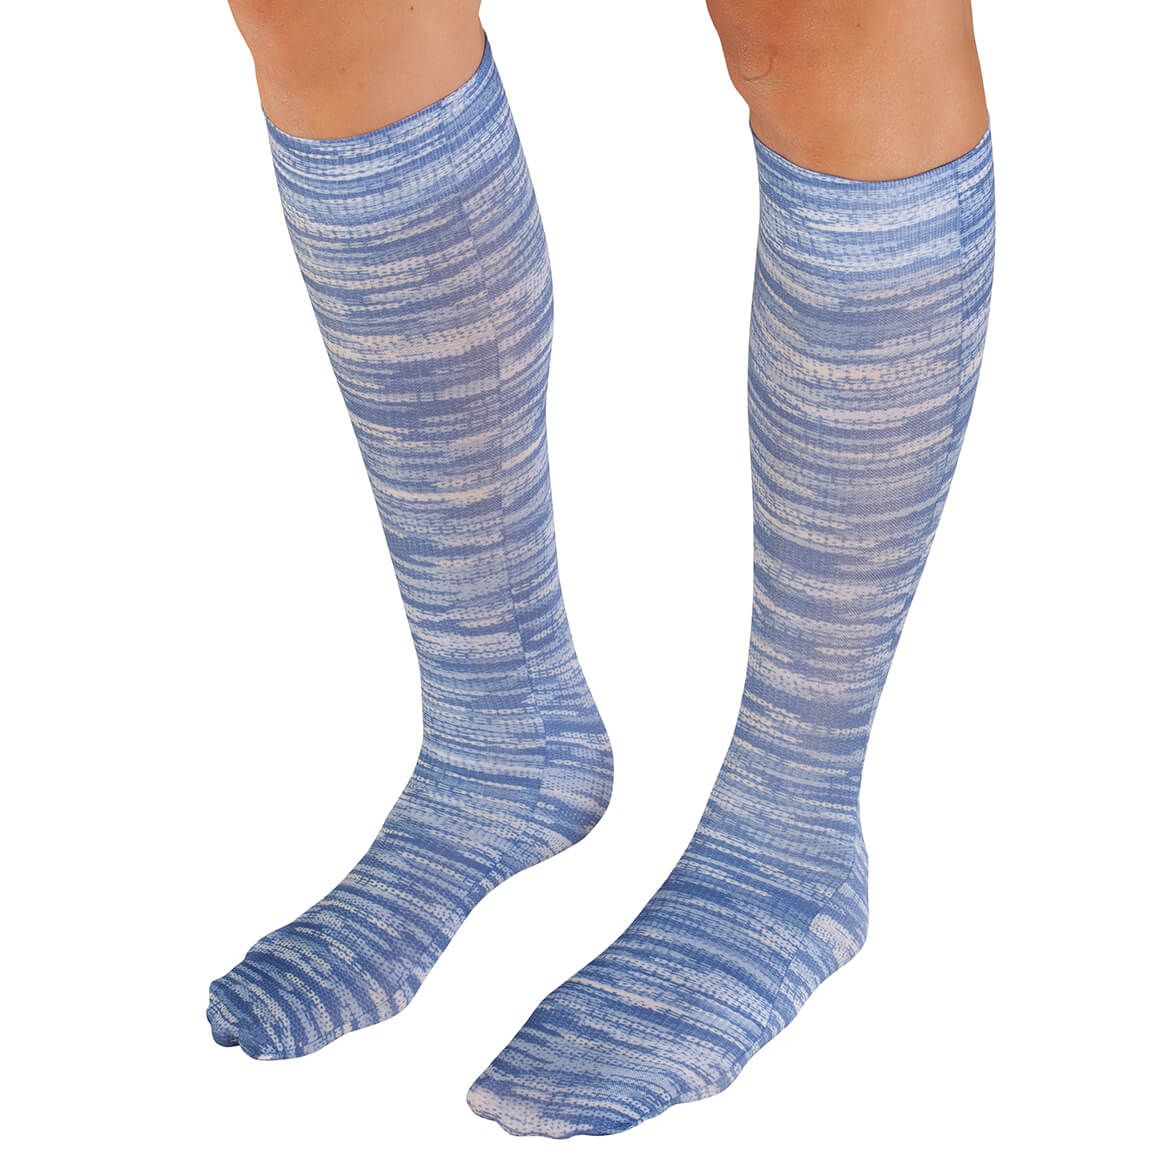 Celeste Stein Compression Socks 20-30mmHg + '-' + 365483